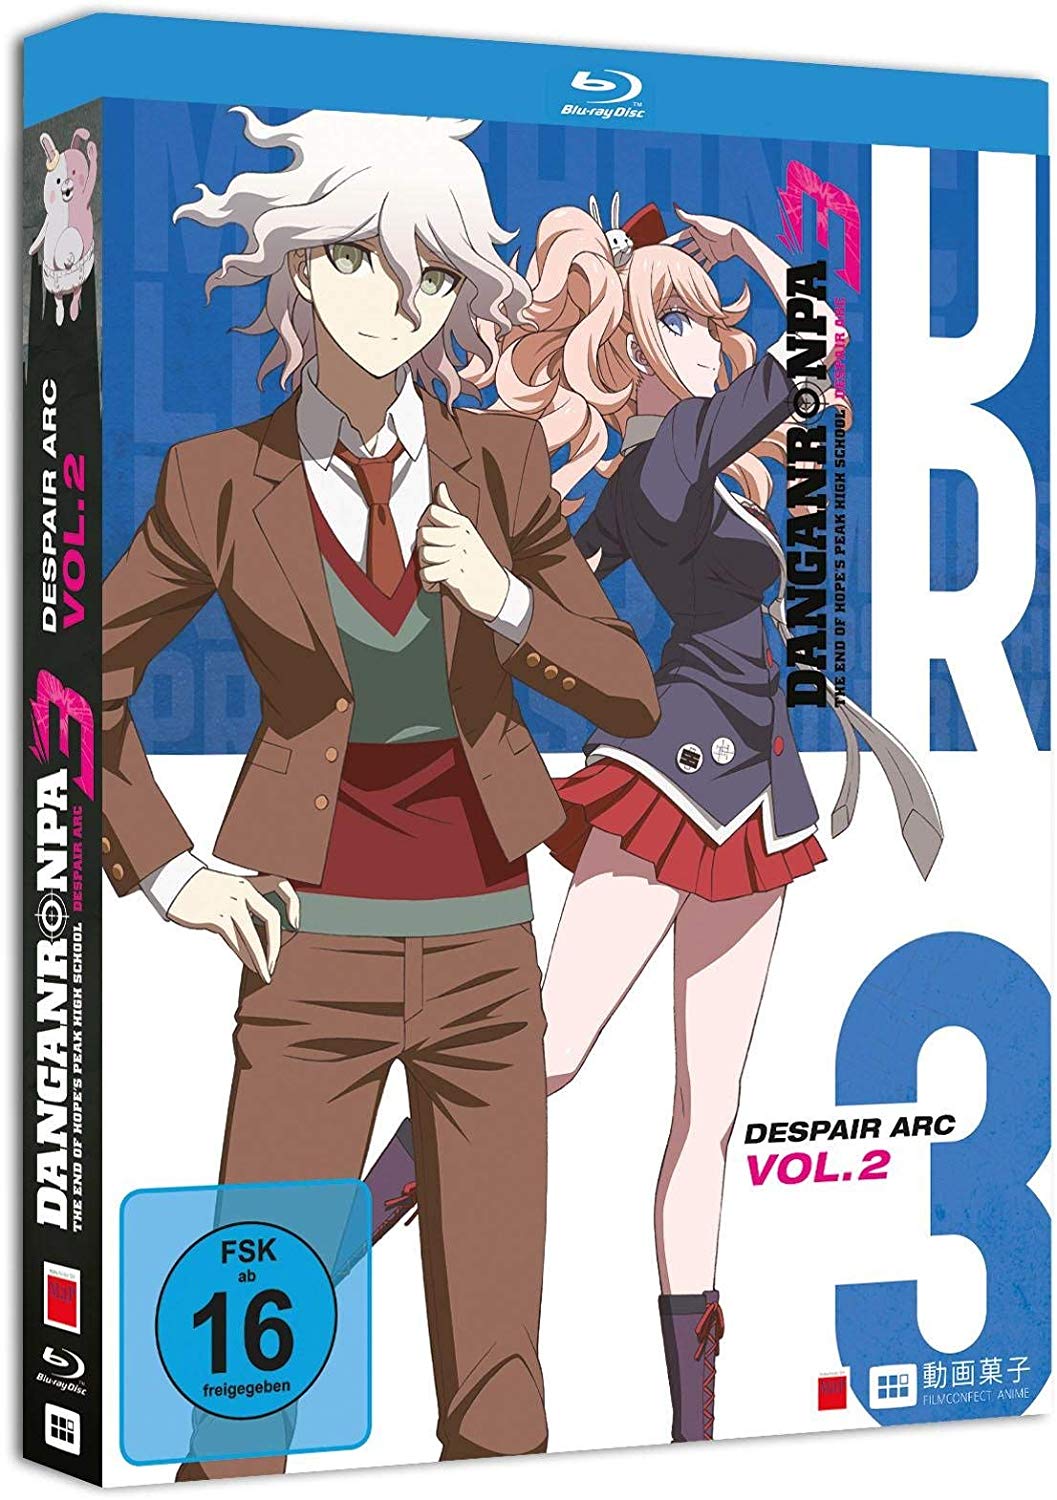 BD JP Ver 4988102437183 Danganronpa 3 The End of Hope's Peak High School Blu-ray Box Vol.3.. 